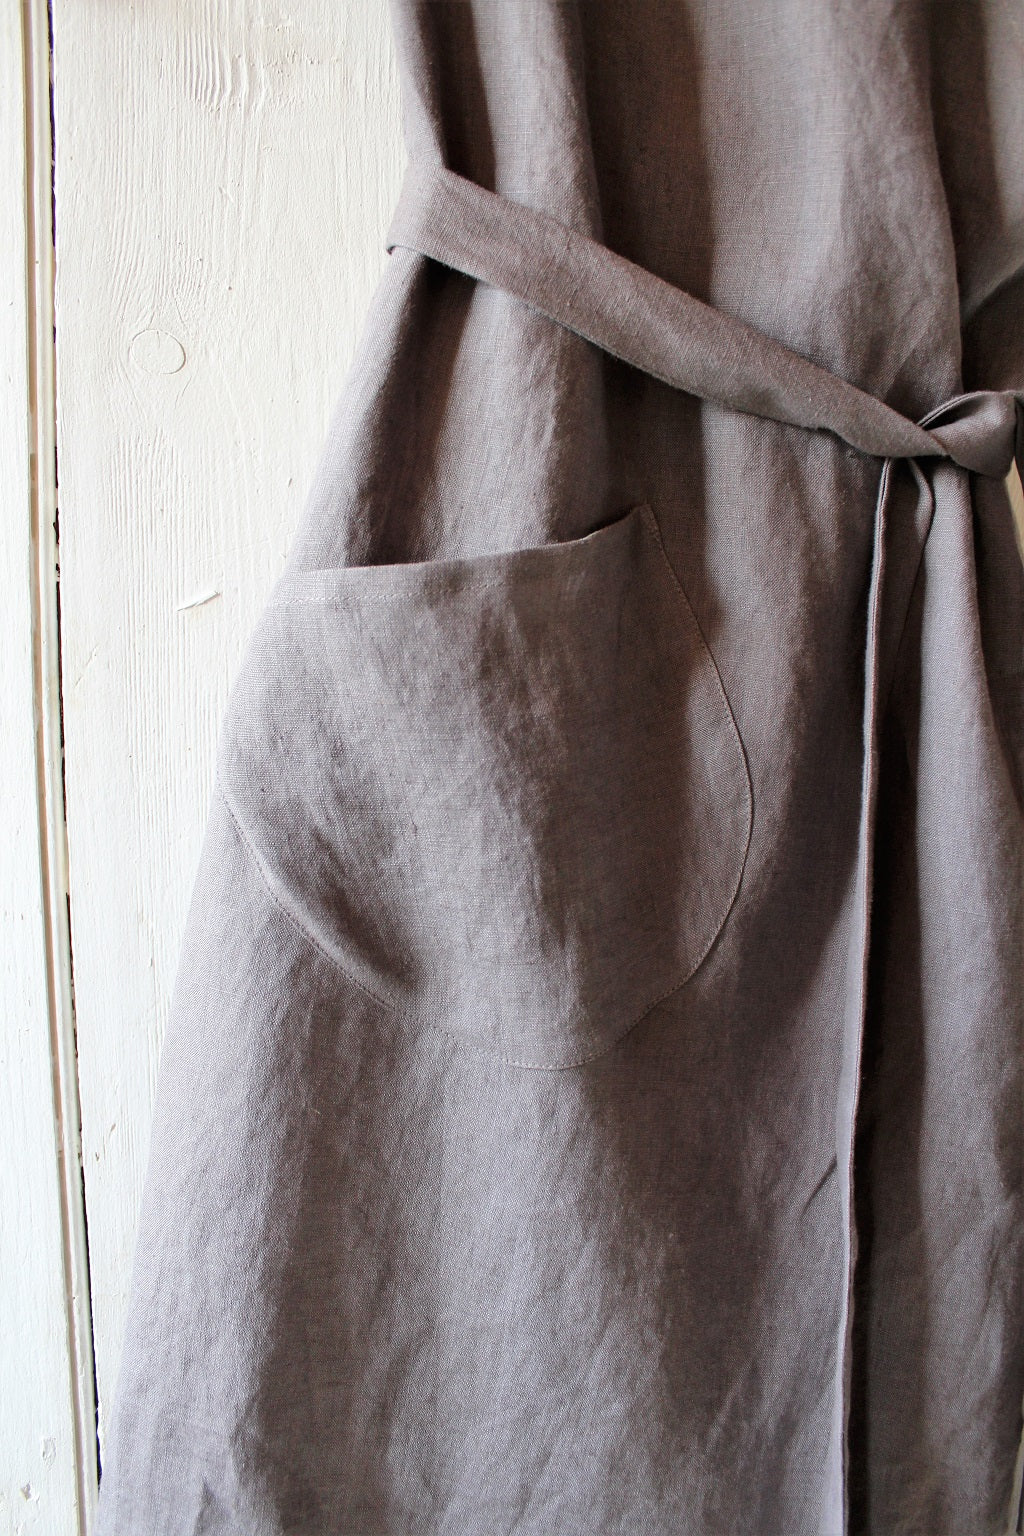 Celeste - linen wrap dress